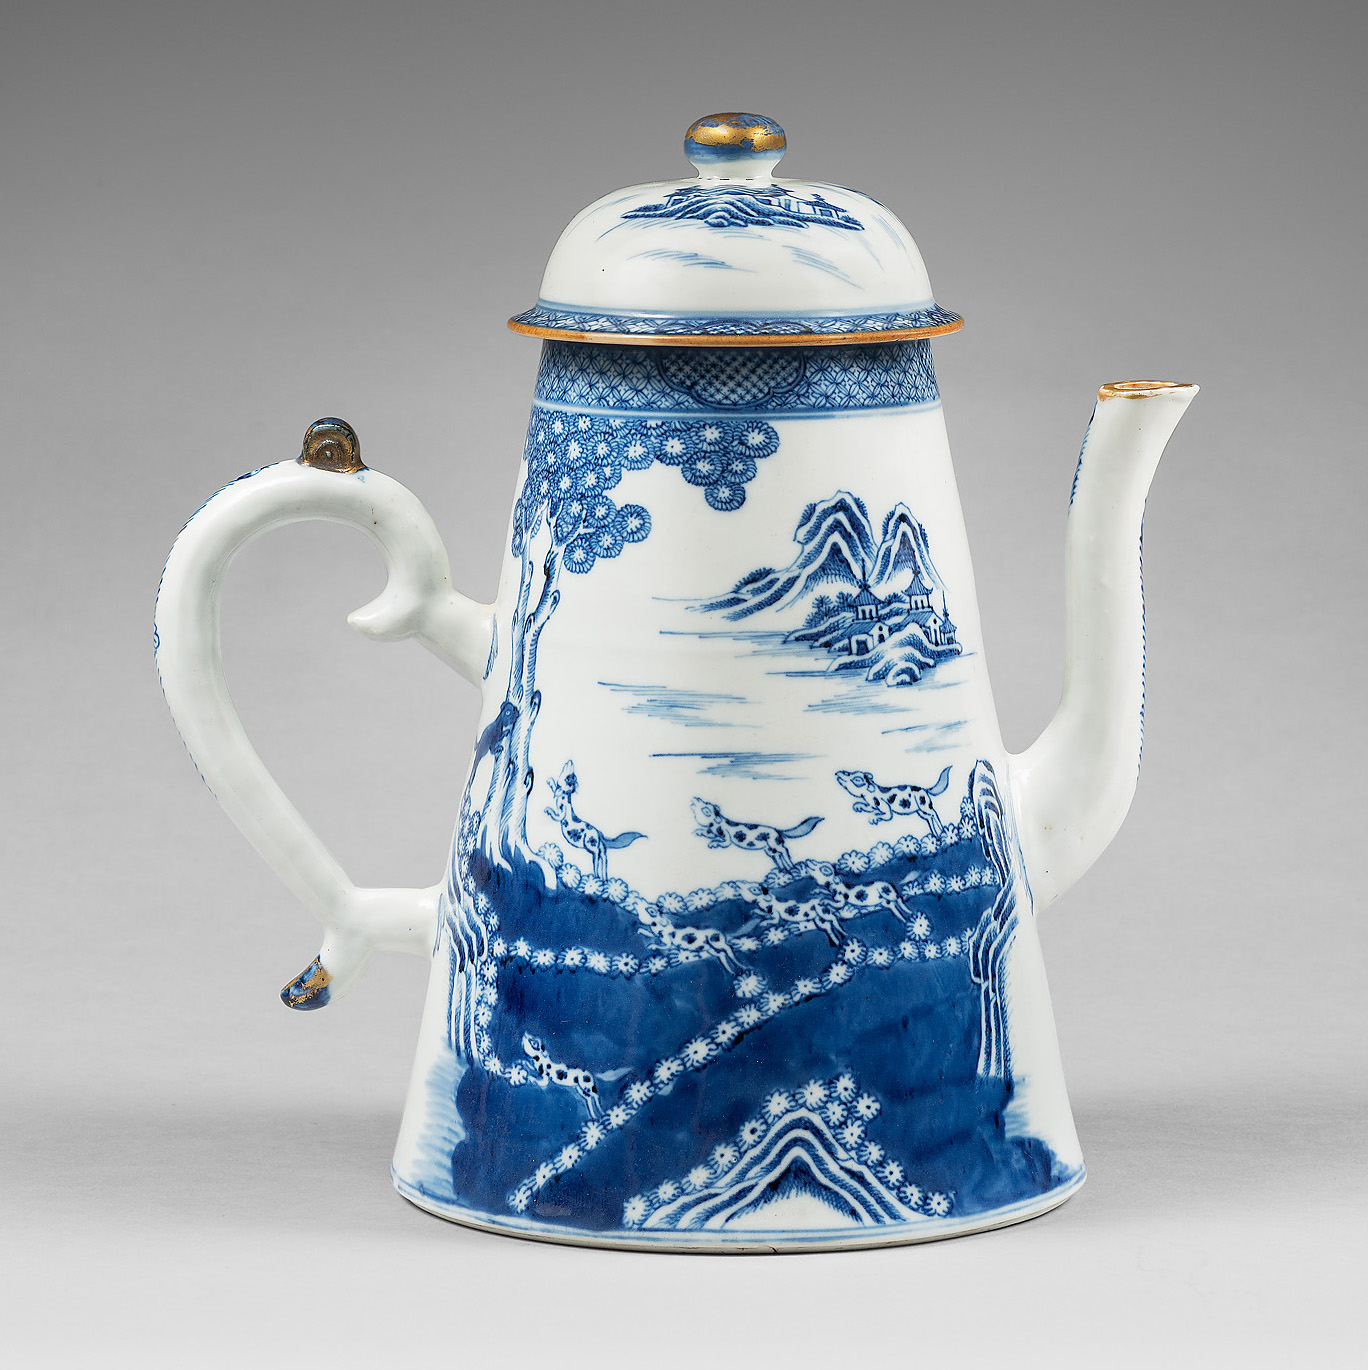 Porcelaine Qianlong (12736-1795), ca. 1770/1780, Chine